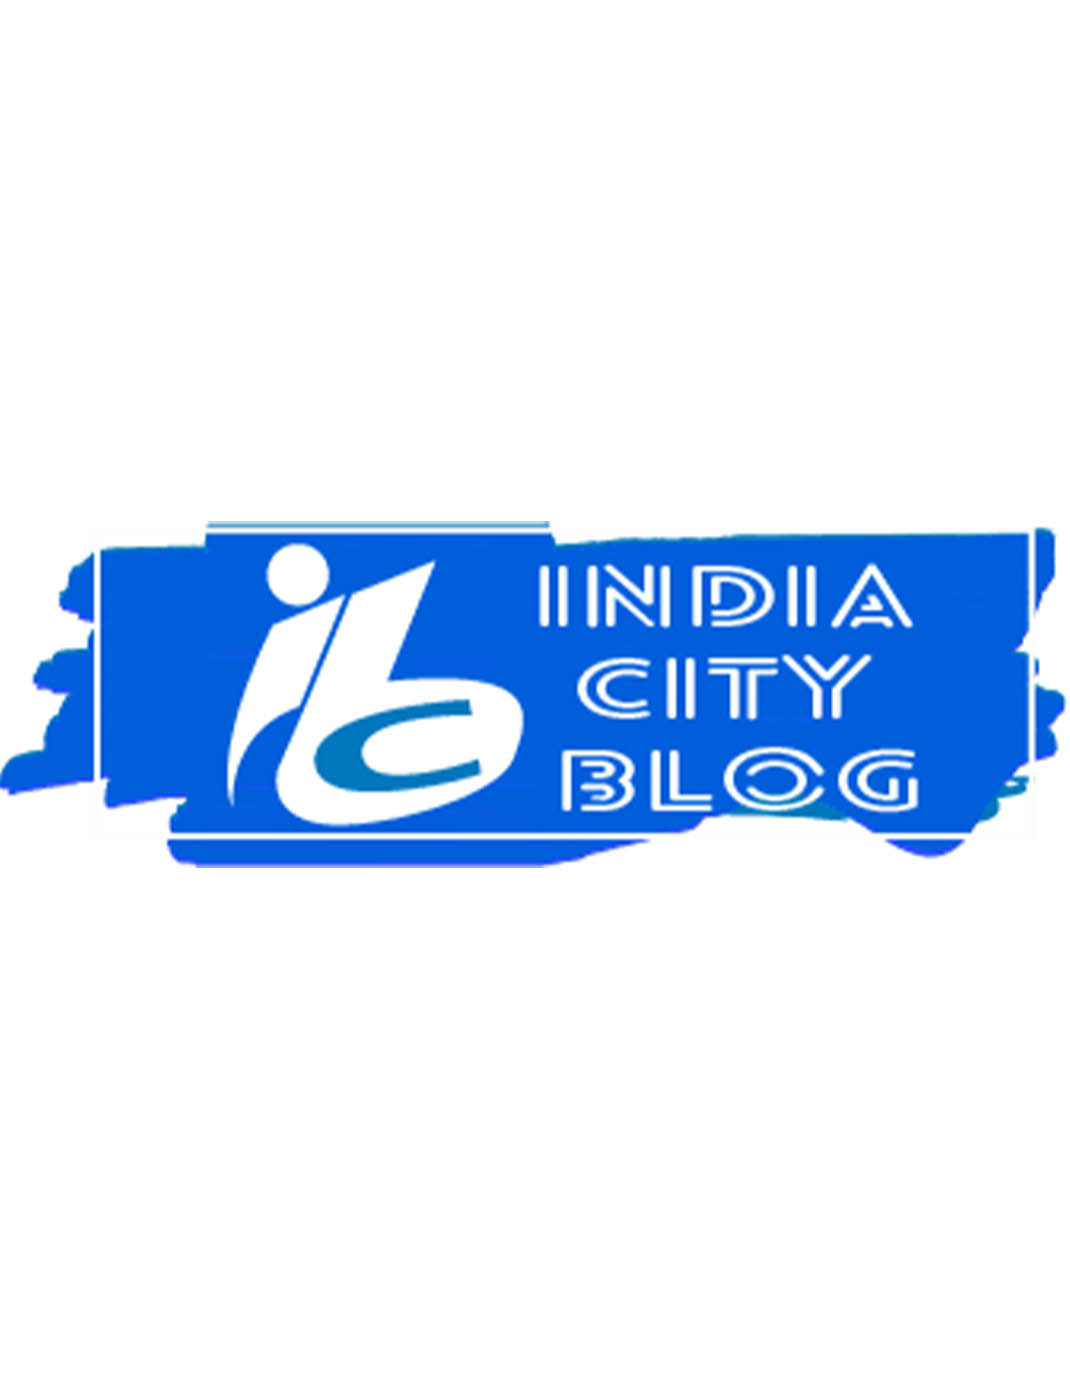 India City Blog